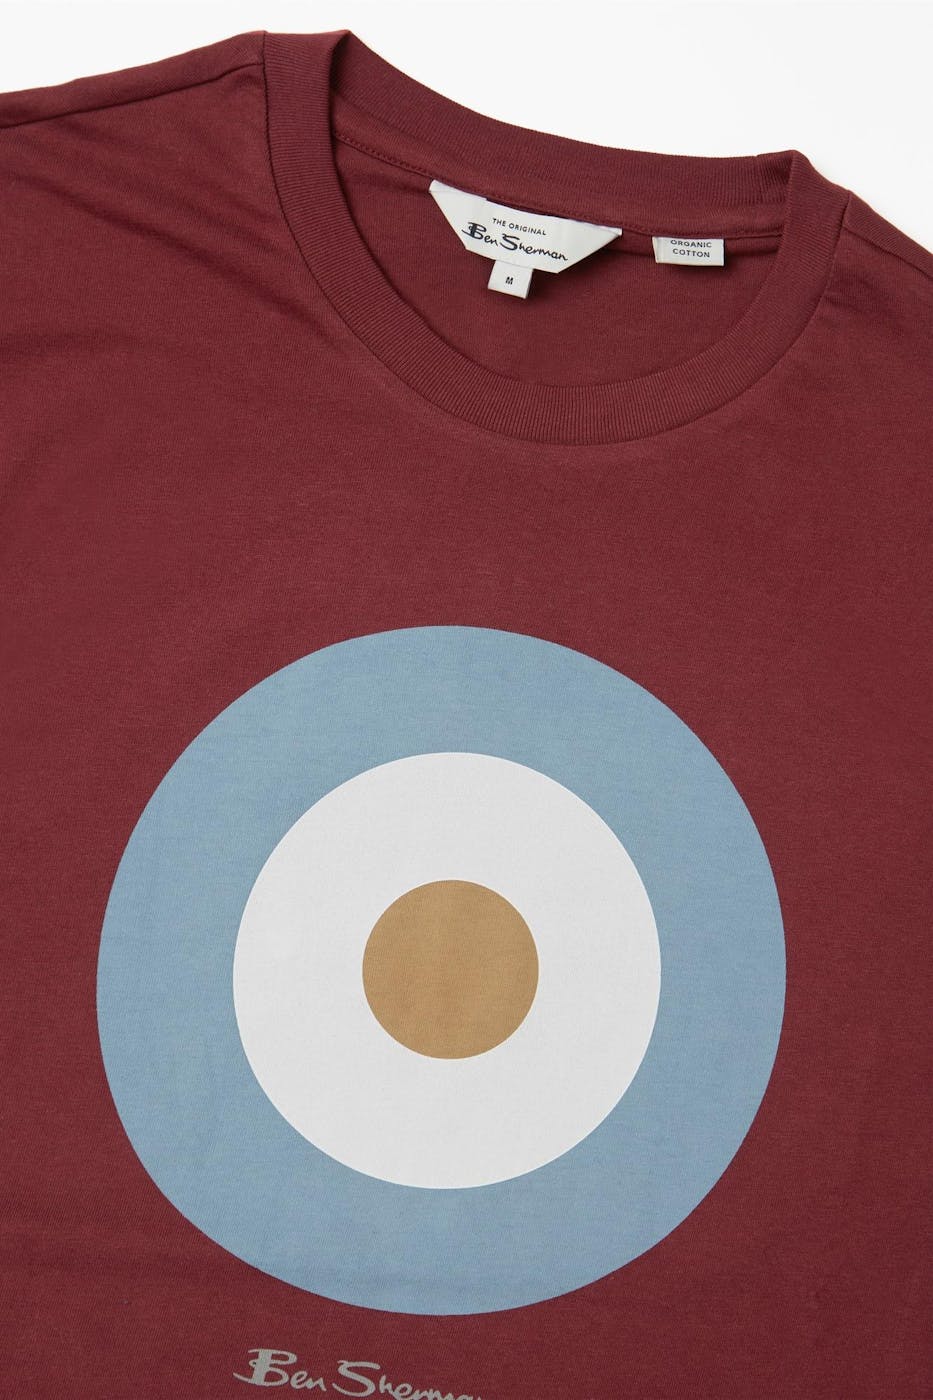 Ben Sherman - Bordeaux Target Graphic T-shirt